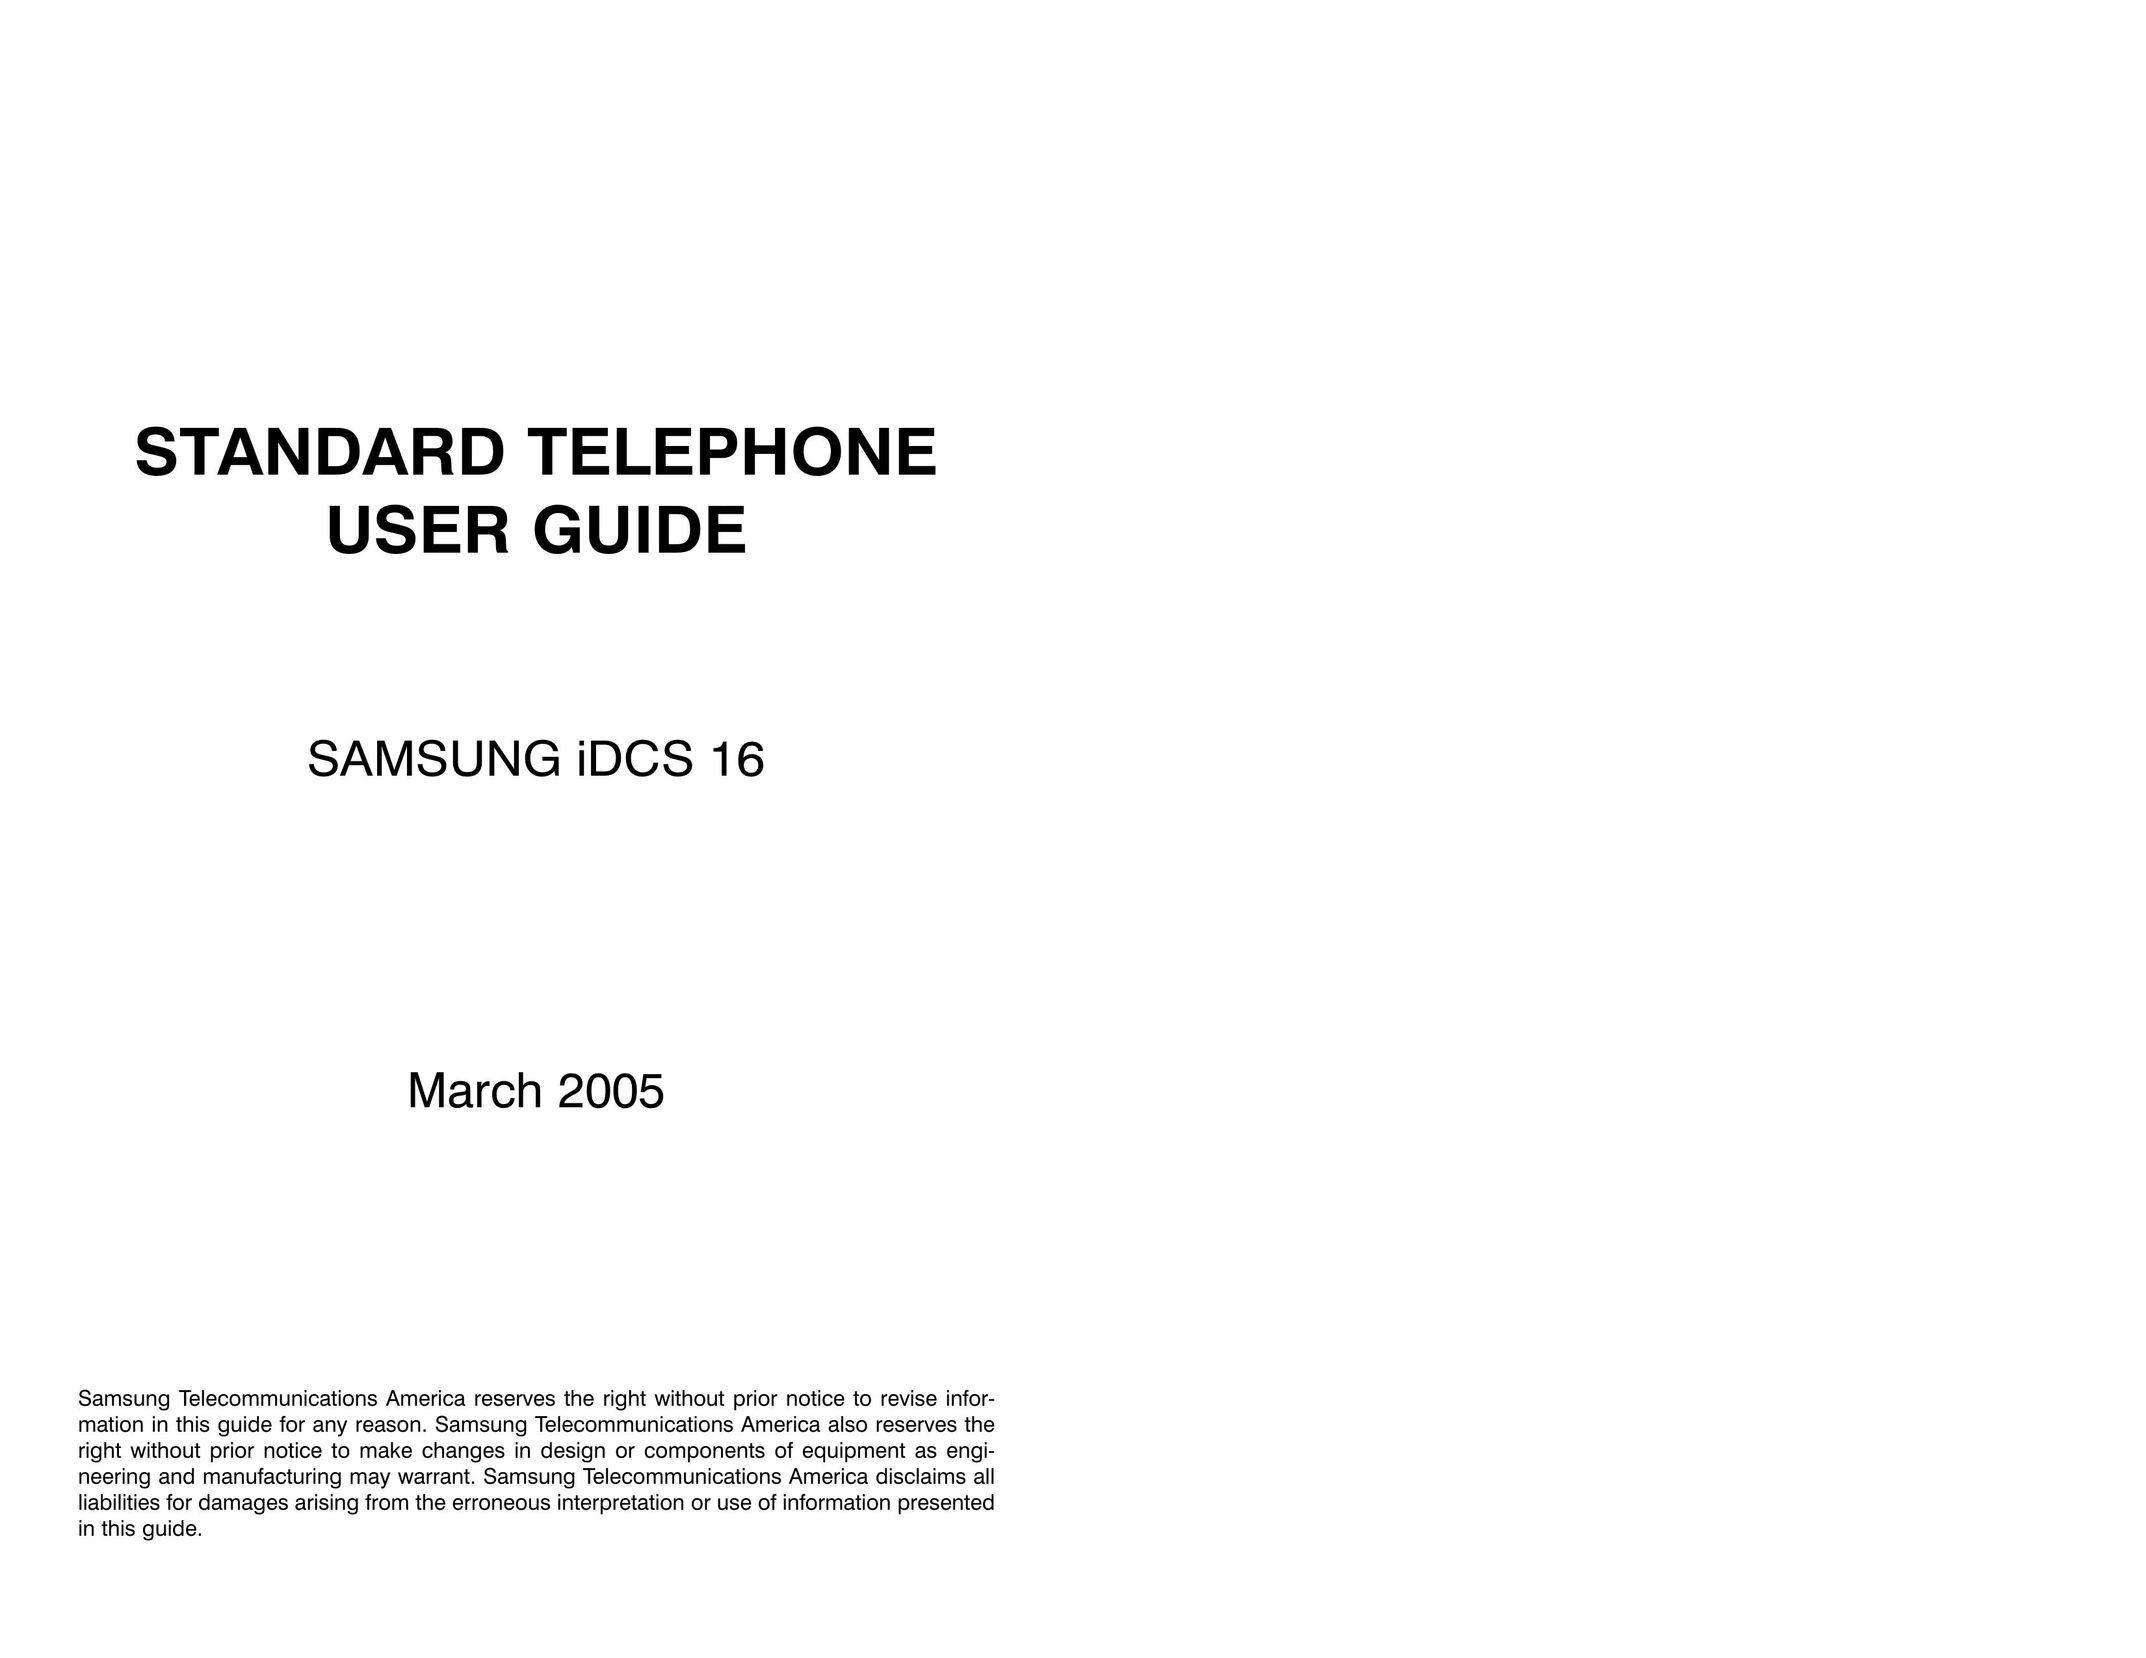 Samsung iDCS 16 Telephone User Manual